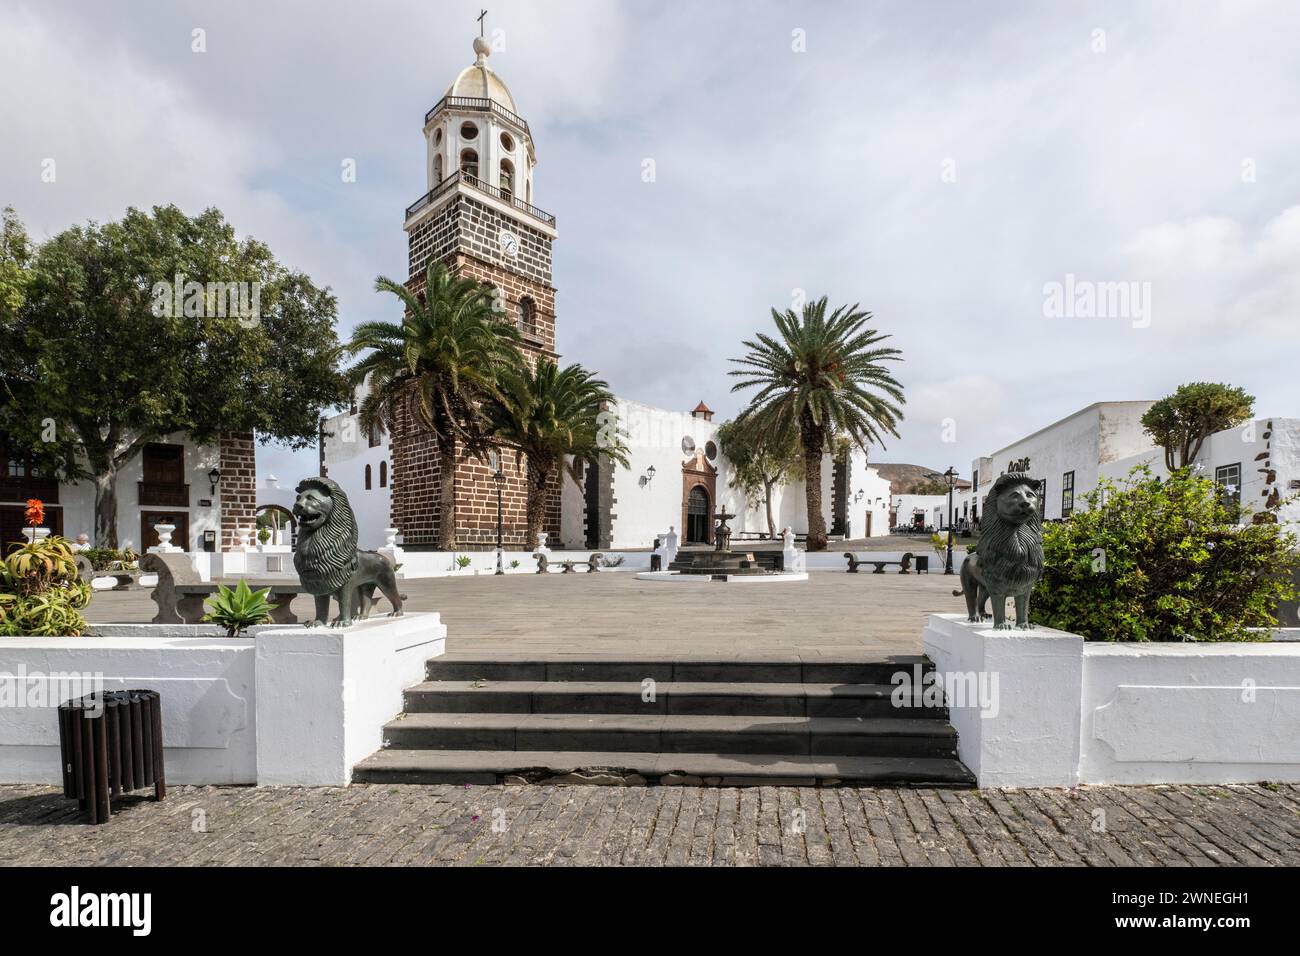 Iglesia de Nuestra Senora de Guadalupe, Teguise, Lanzarote, Canary Islands, Spain Stock Photo